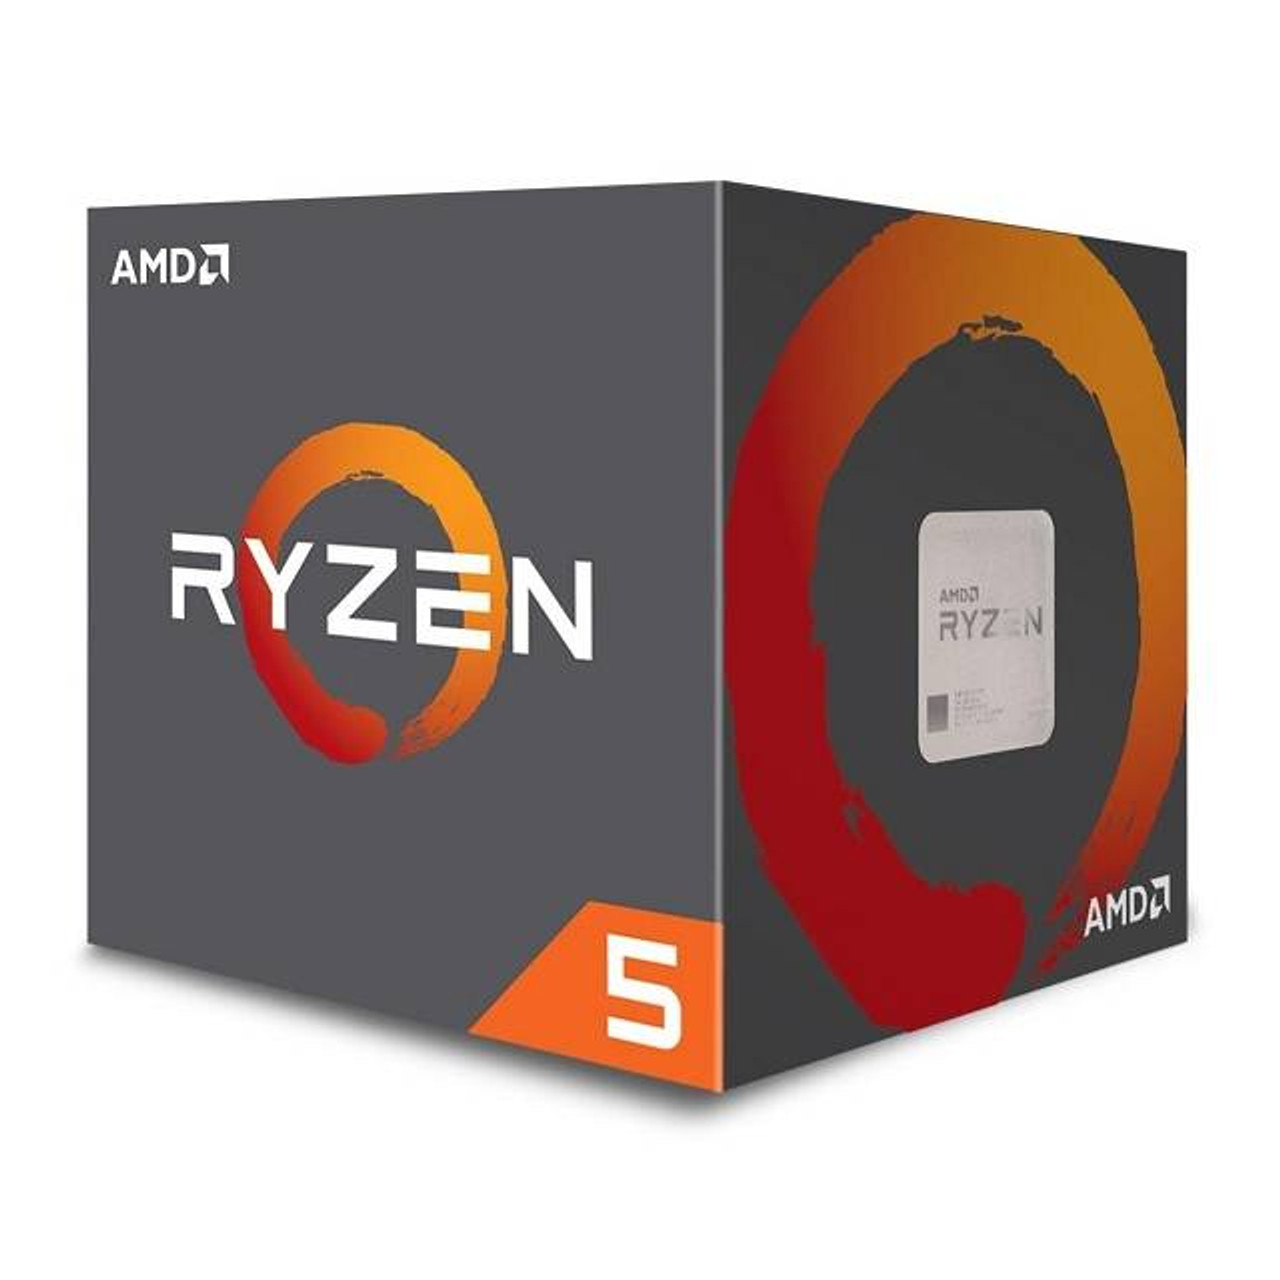 AMD Ryzen 5 1400 Quad-Core 3.2GHz Socket AM4,